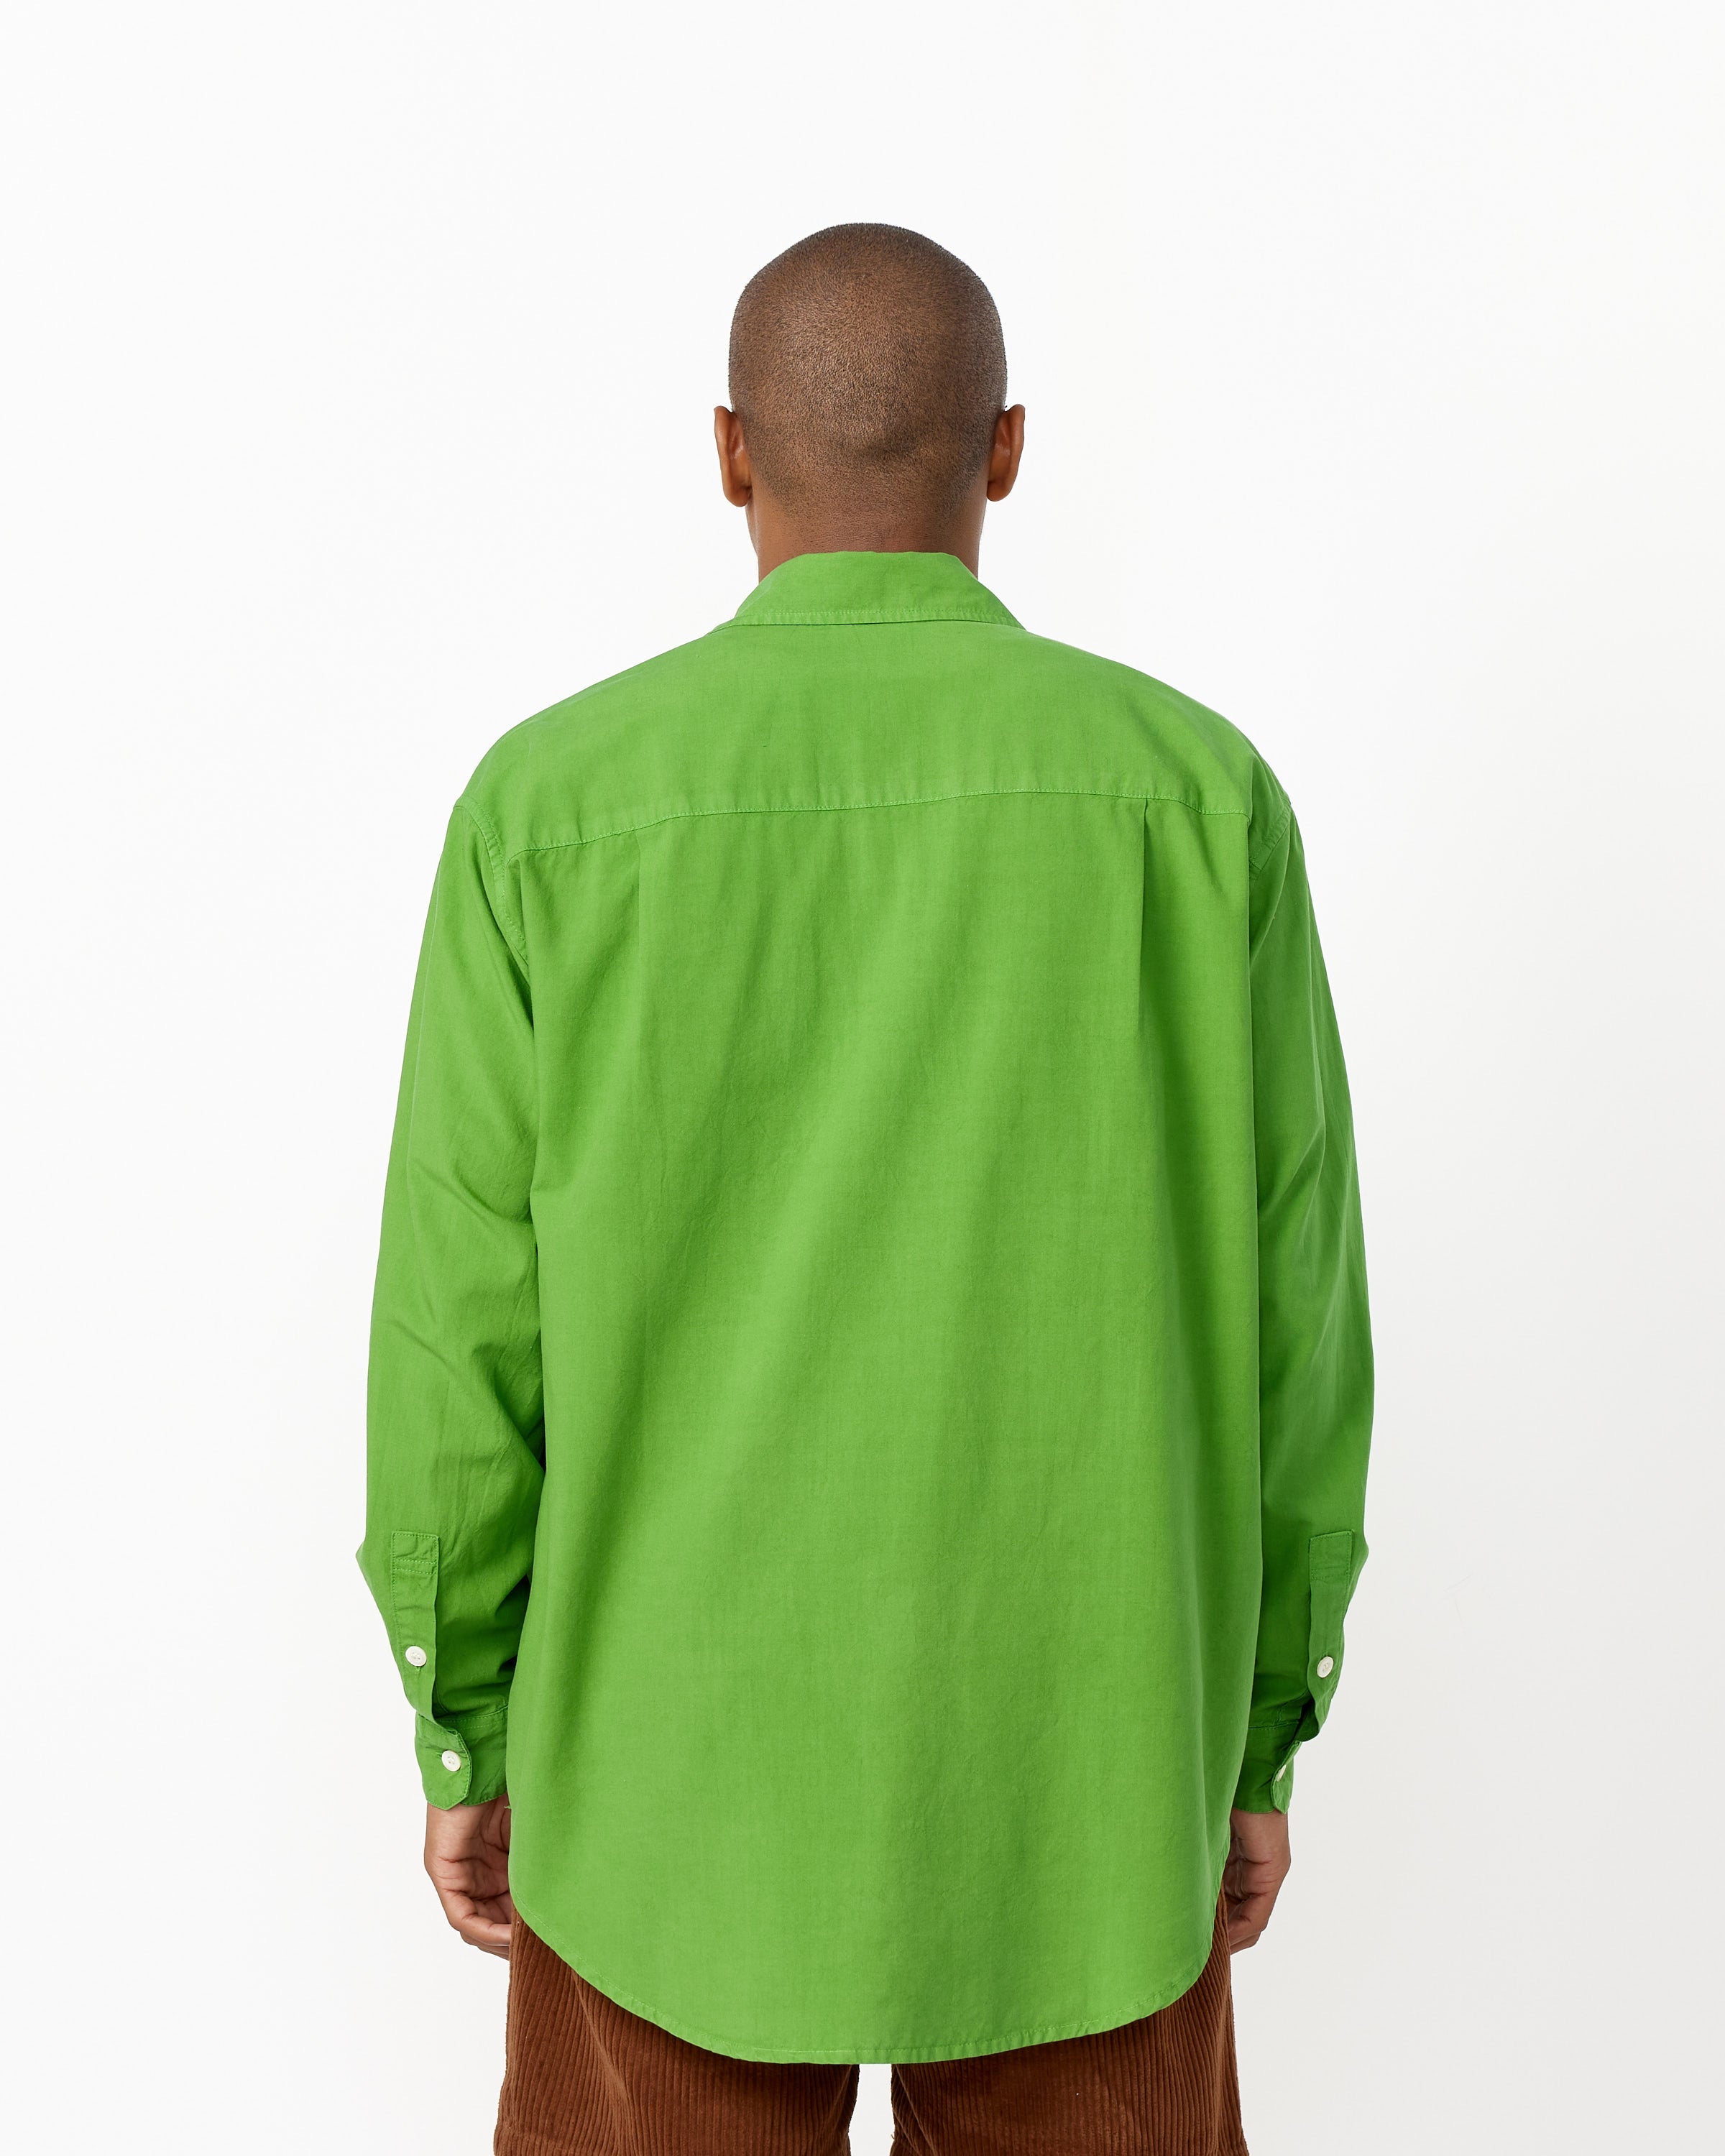 Routine Shirt in Emerald Green